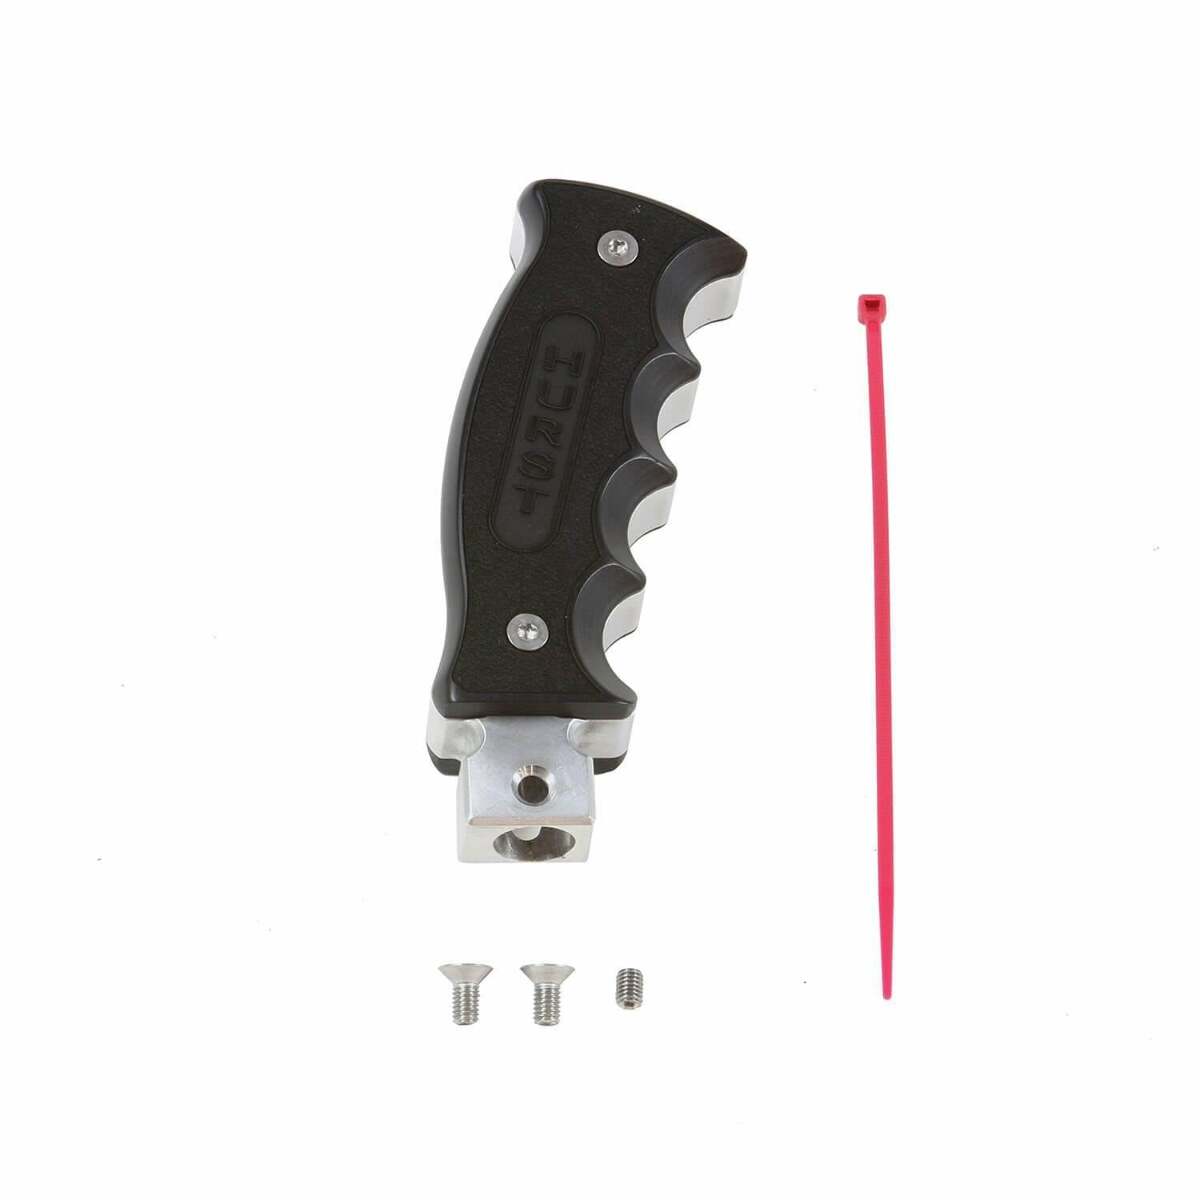 Hurst Billet/Plus Pistol Grip Manual Shift Handle - 1531003